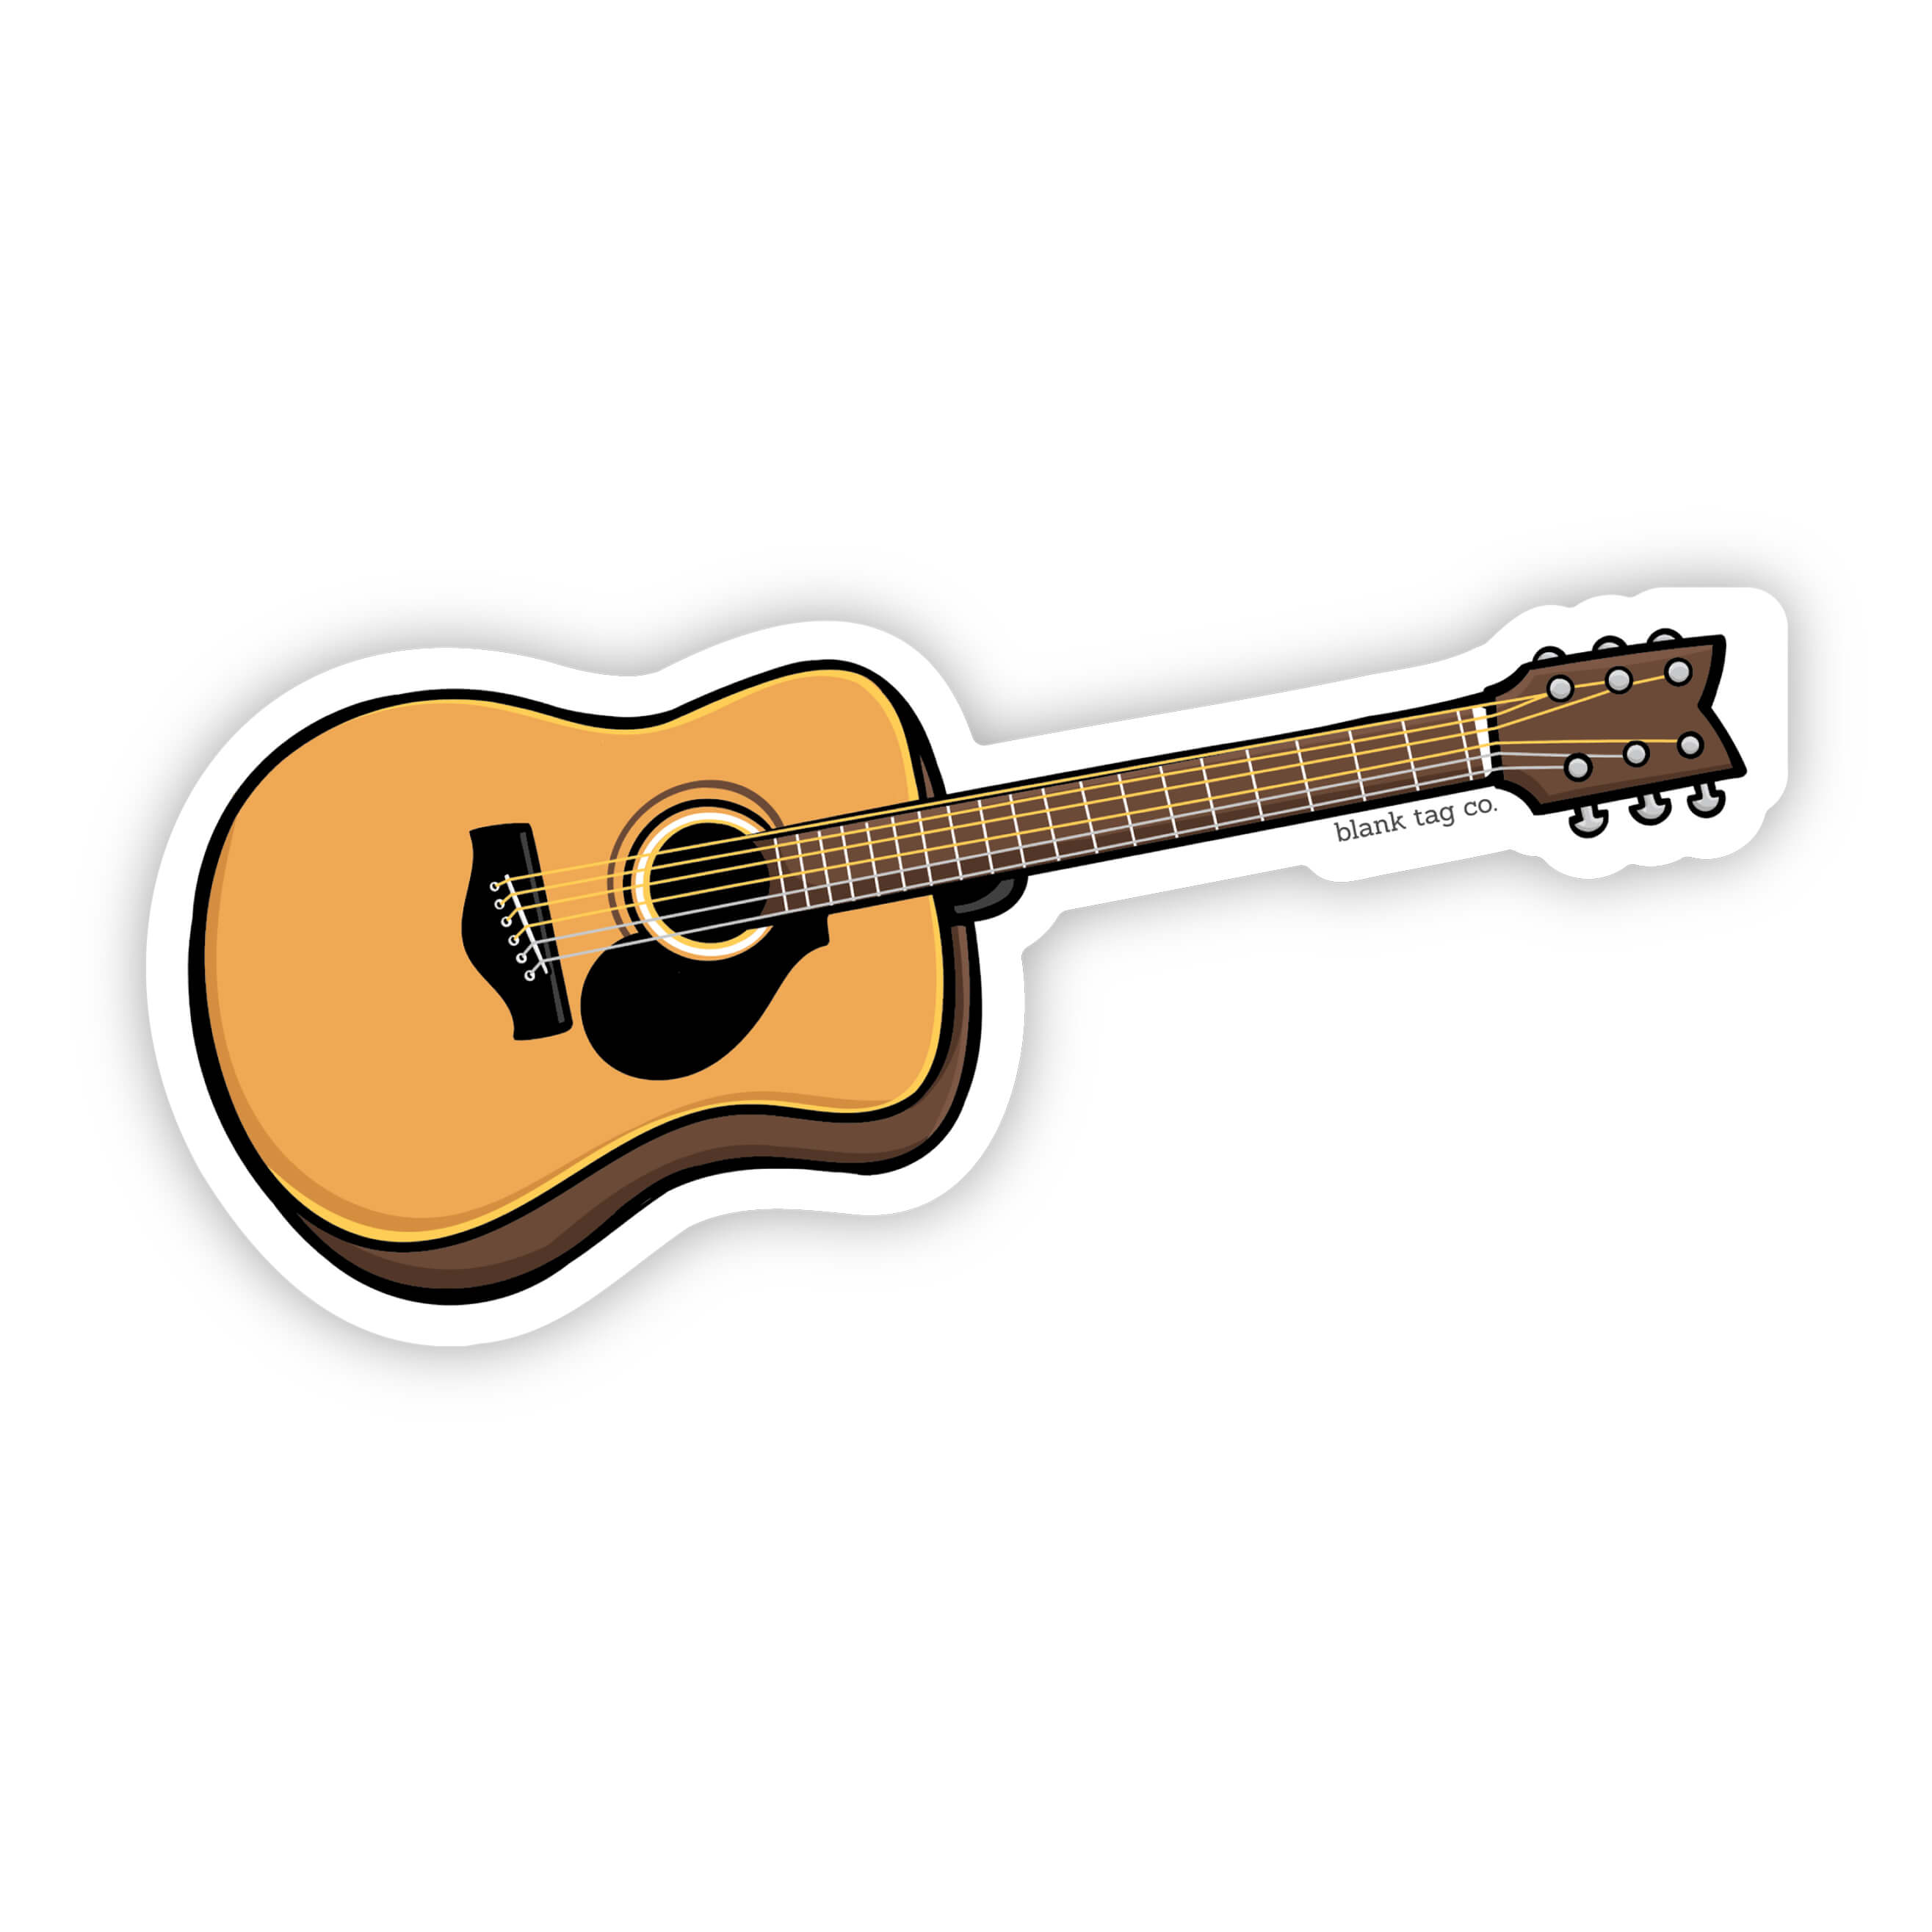 The Guitar Sticker